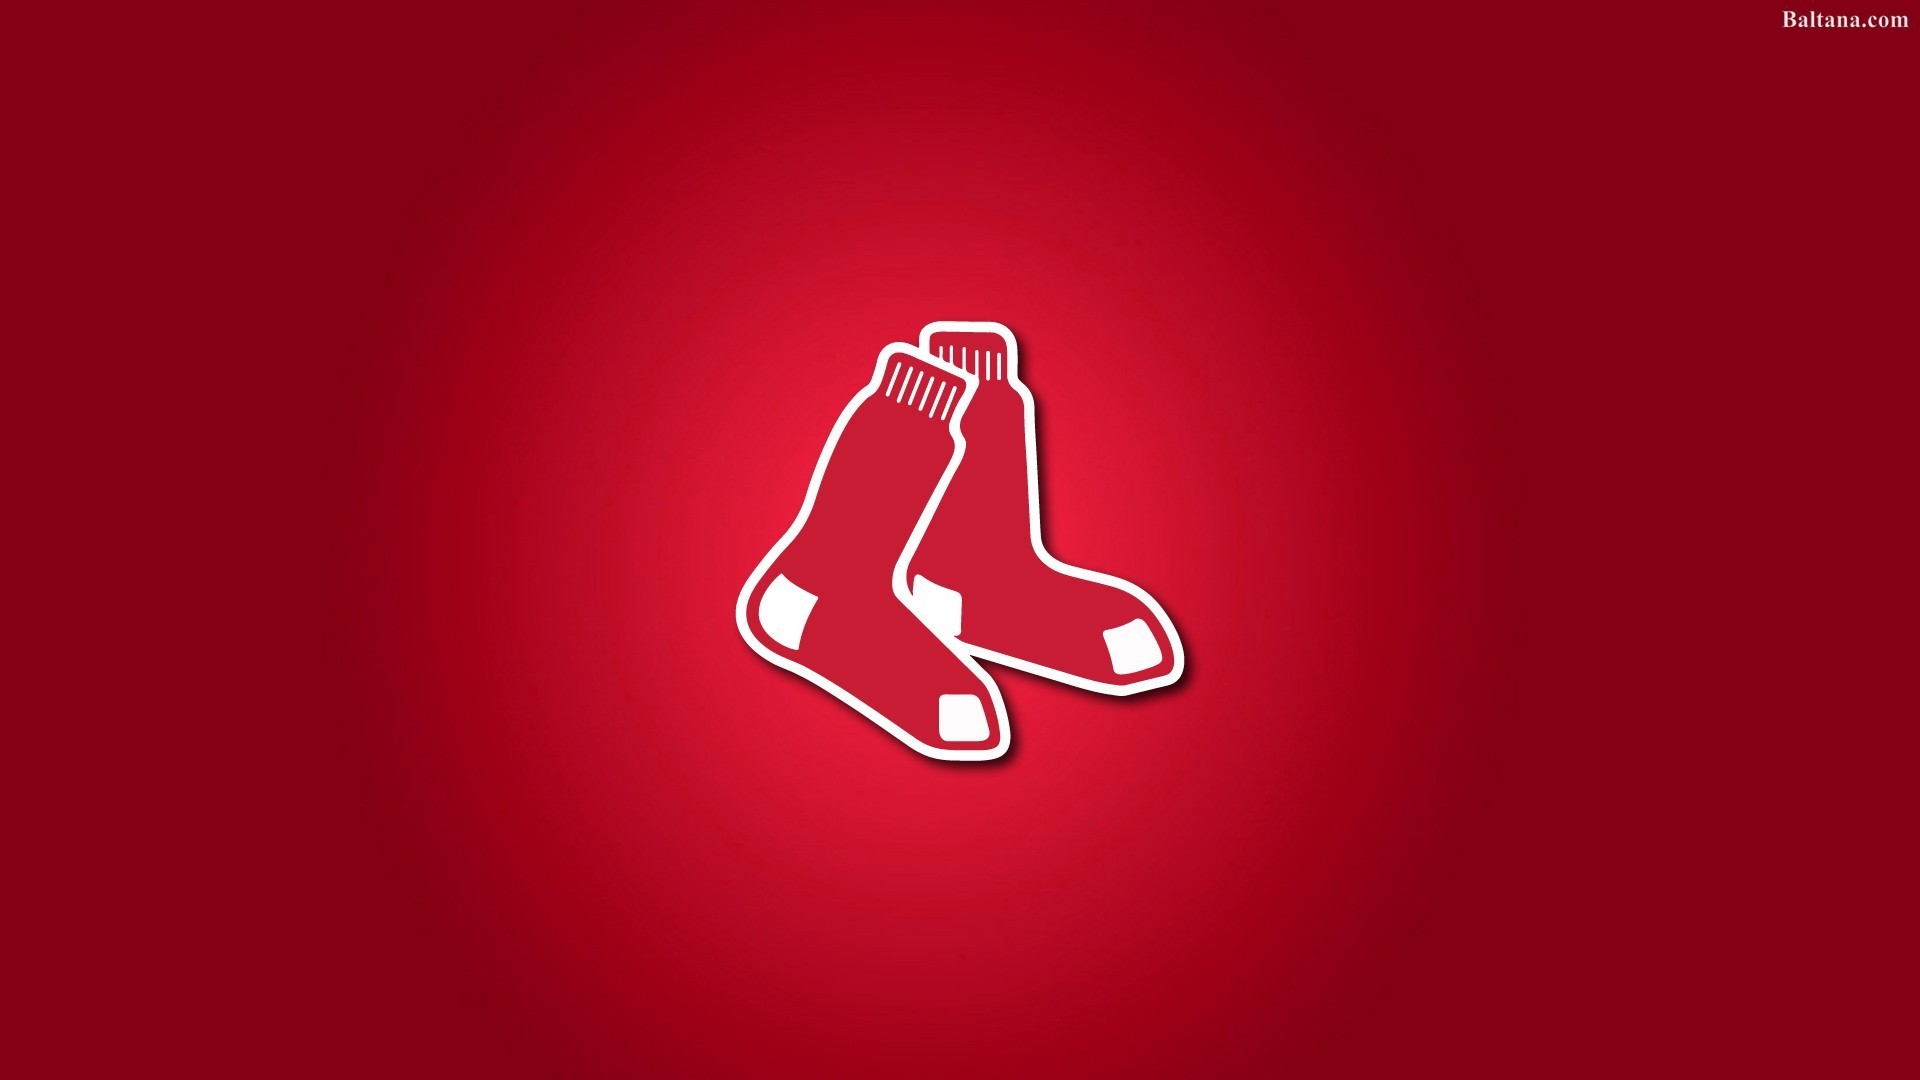 1920x1080 Boston Red Sox Wallpaper 33009